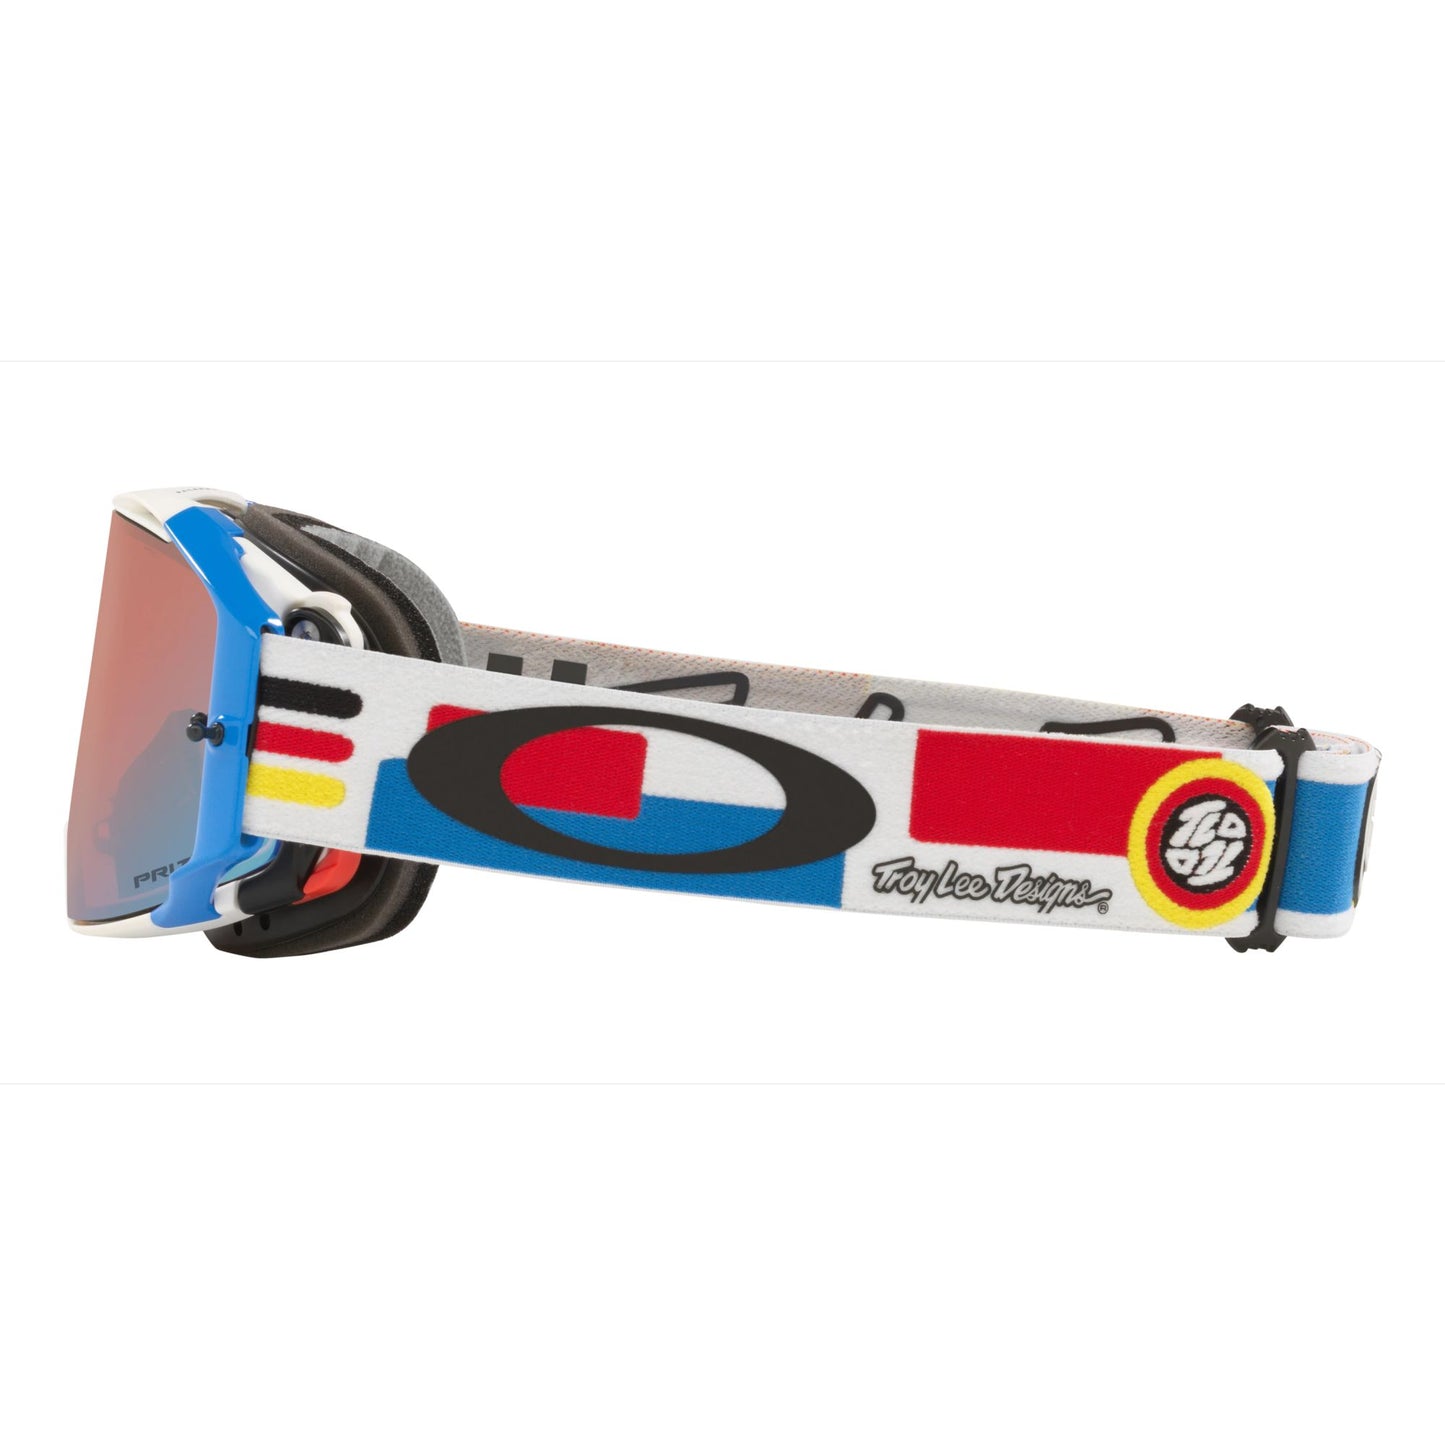 Oakley Airbrake MTB Goggles White Dropin / Prizm MX Sapphire Bike Goggles